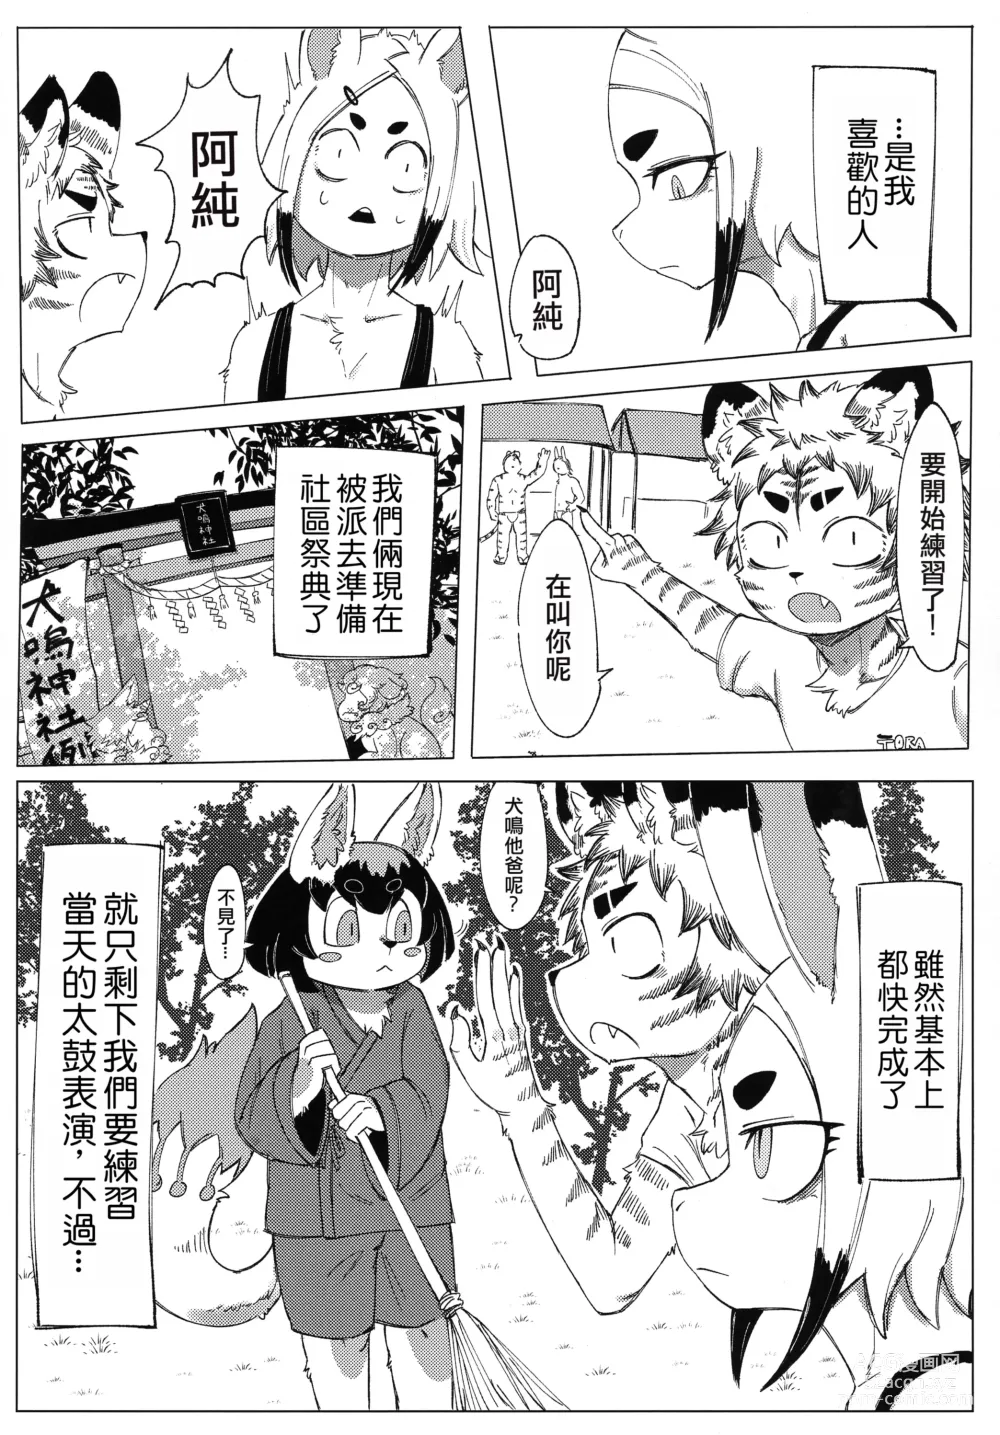 Page 6 of doujinshi 祭典前日